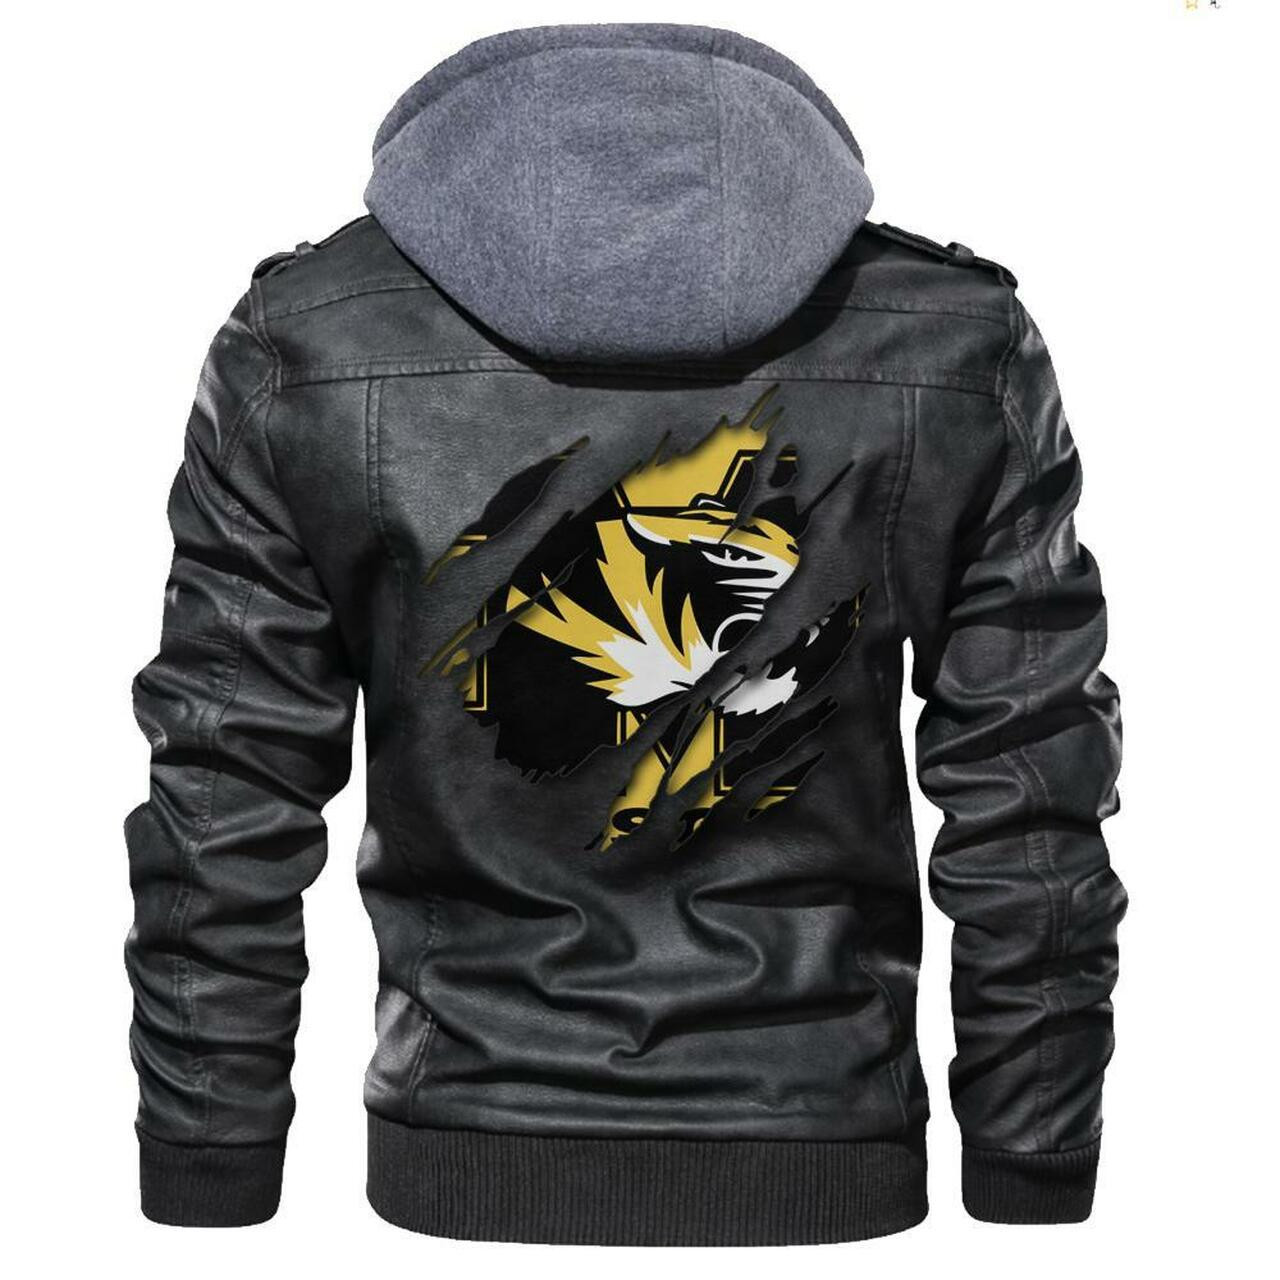 Top leather jacket Sells Best on Techcomshop 42